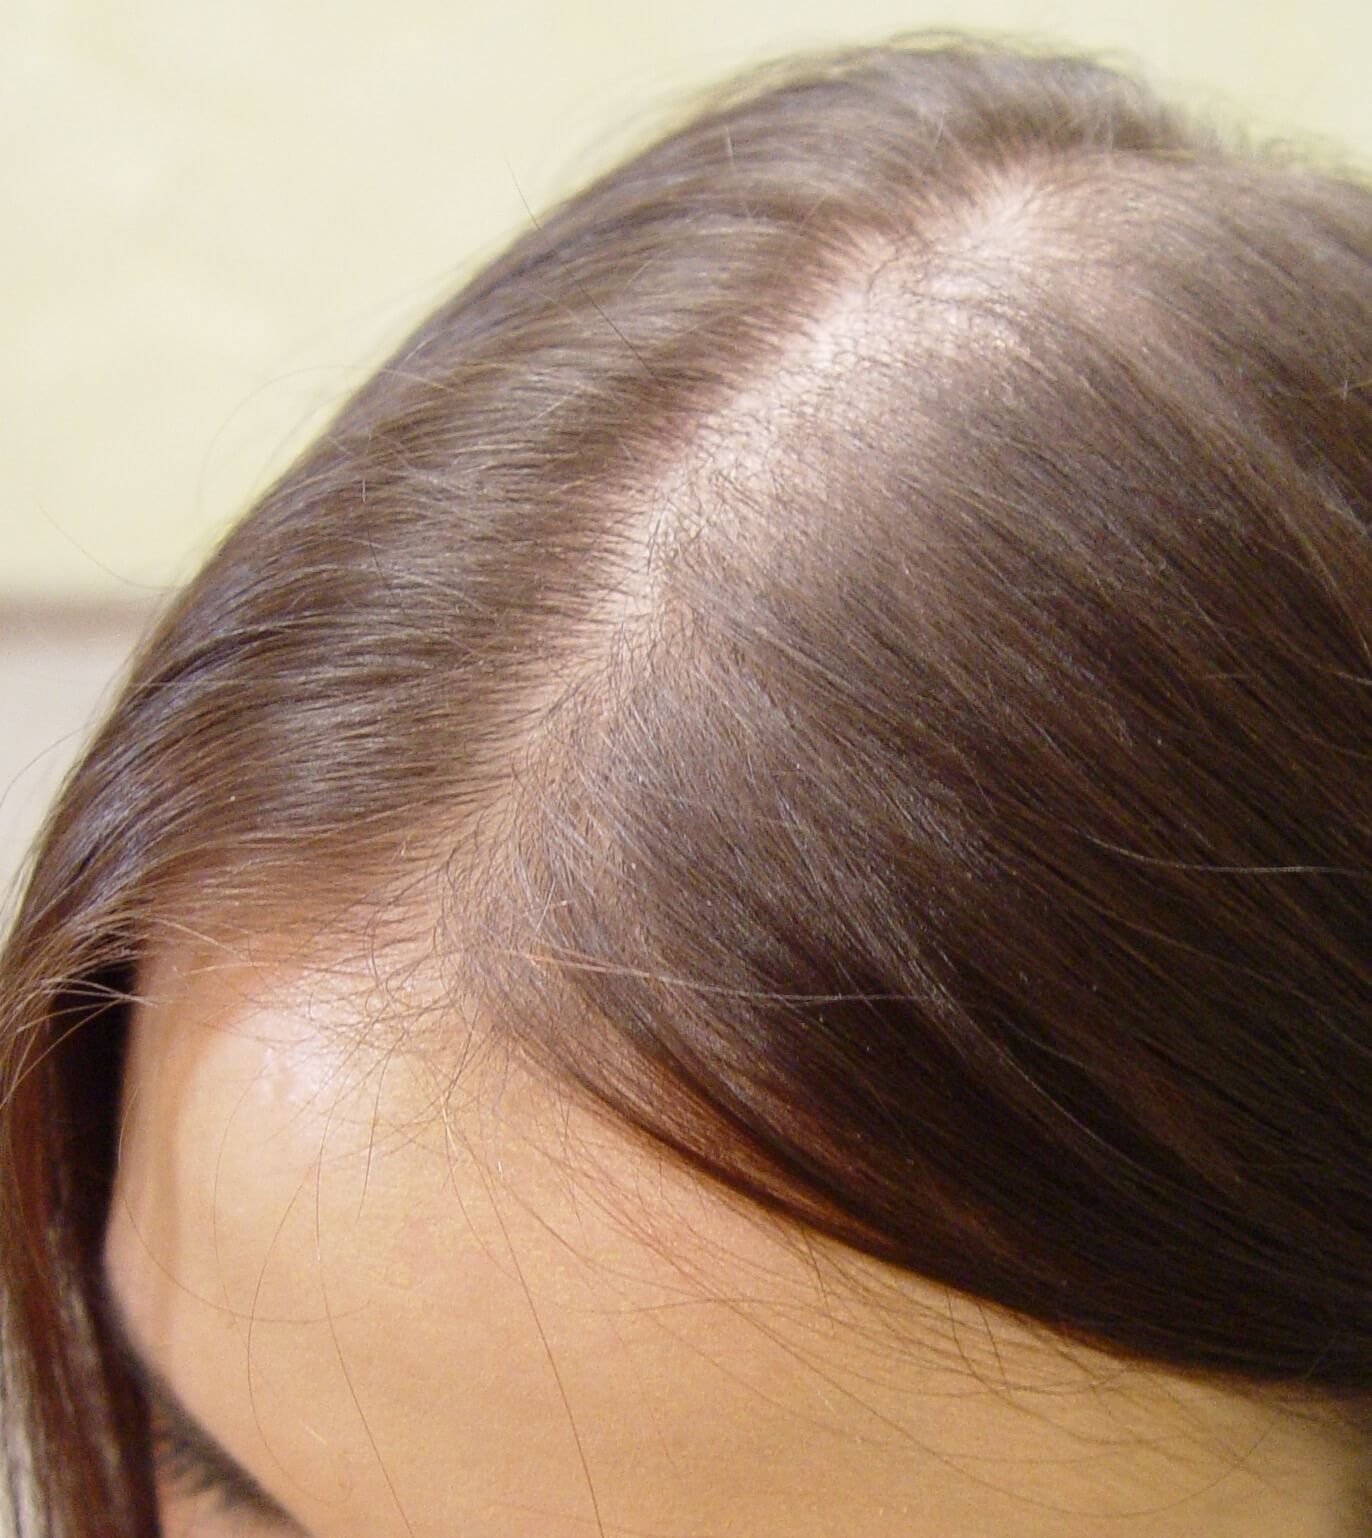 Diffuse Alopezie